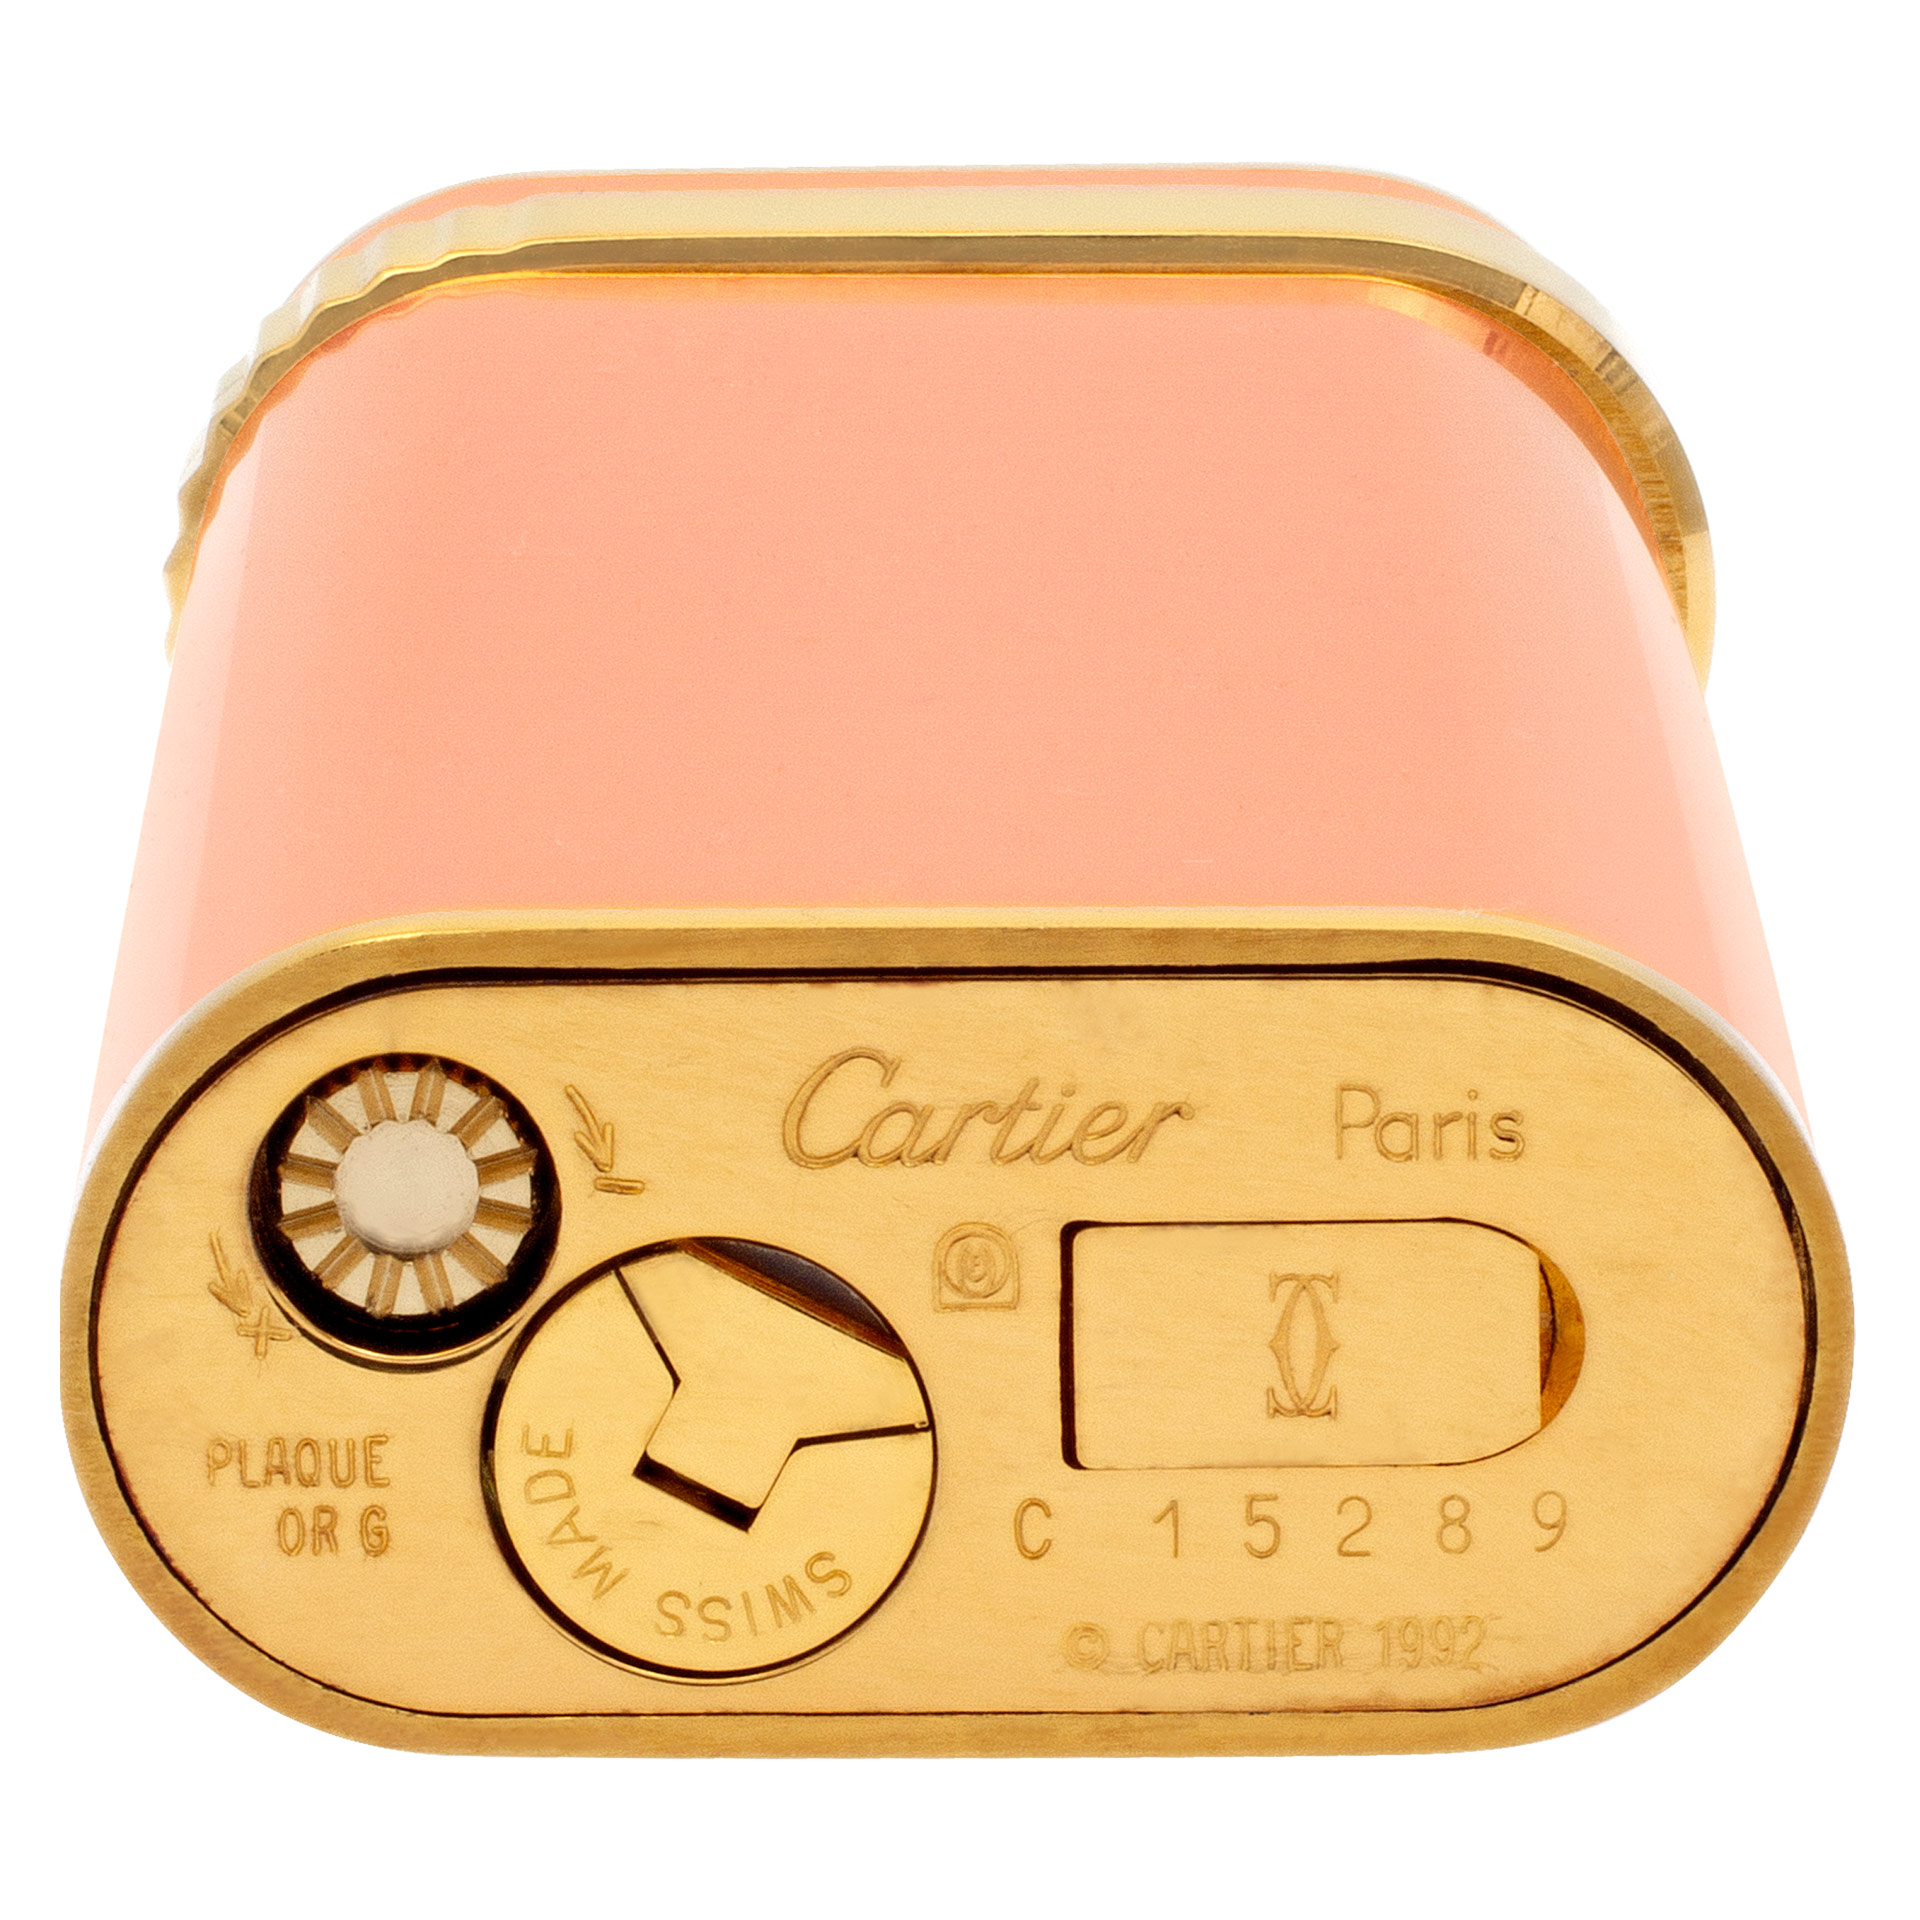 Cartier lighter in baby pink color 